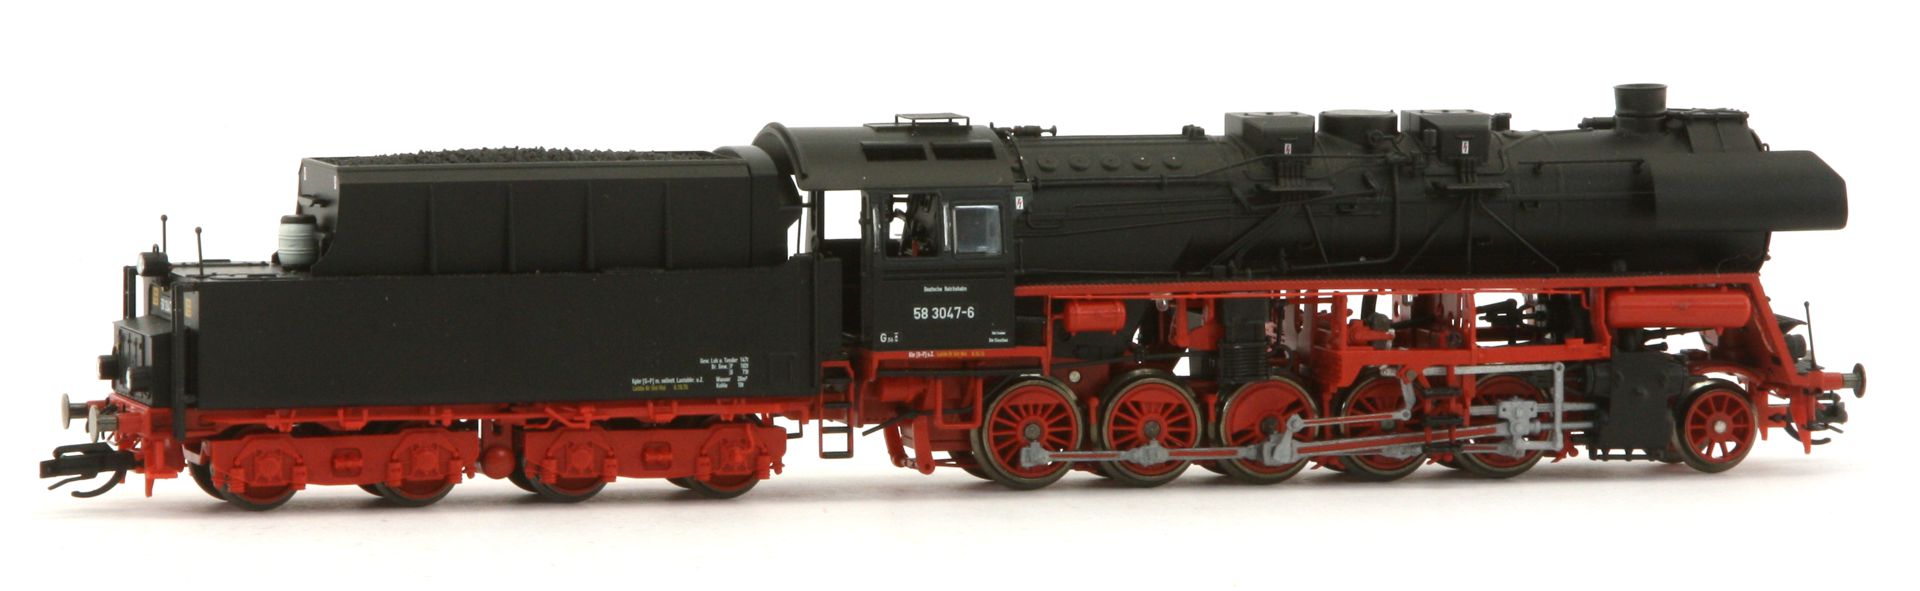 Saxonia 120084 - Dampflok BR 58.30, 58 3047-6, DR, Ep.IV